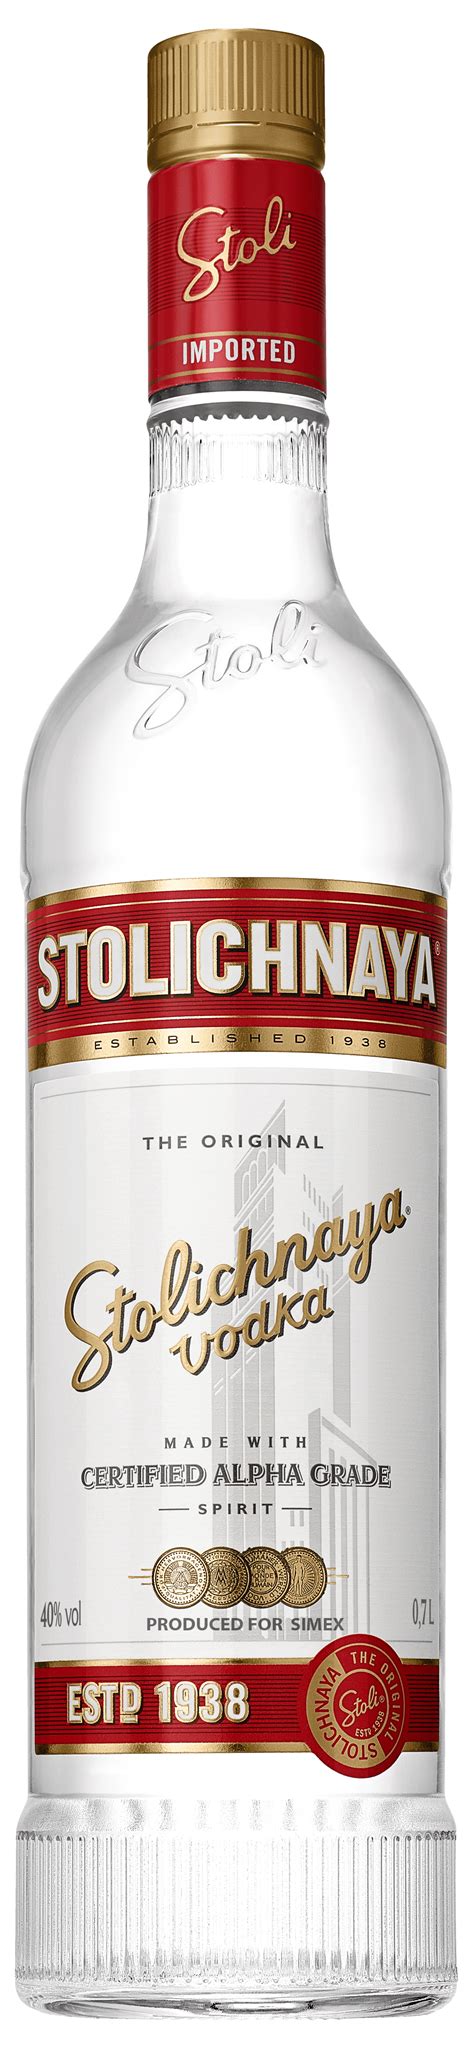 Vodka Stolichnaya Economato De Comunidades